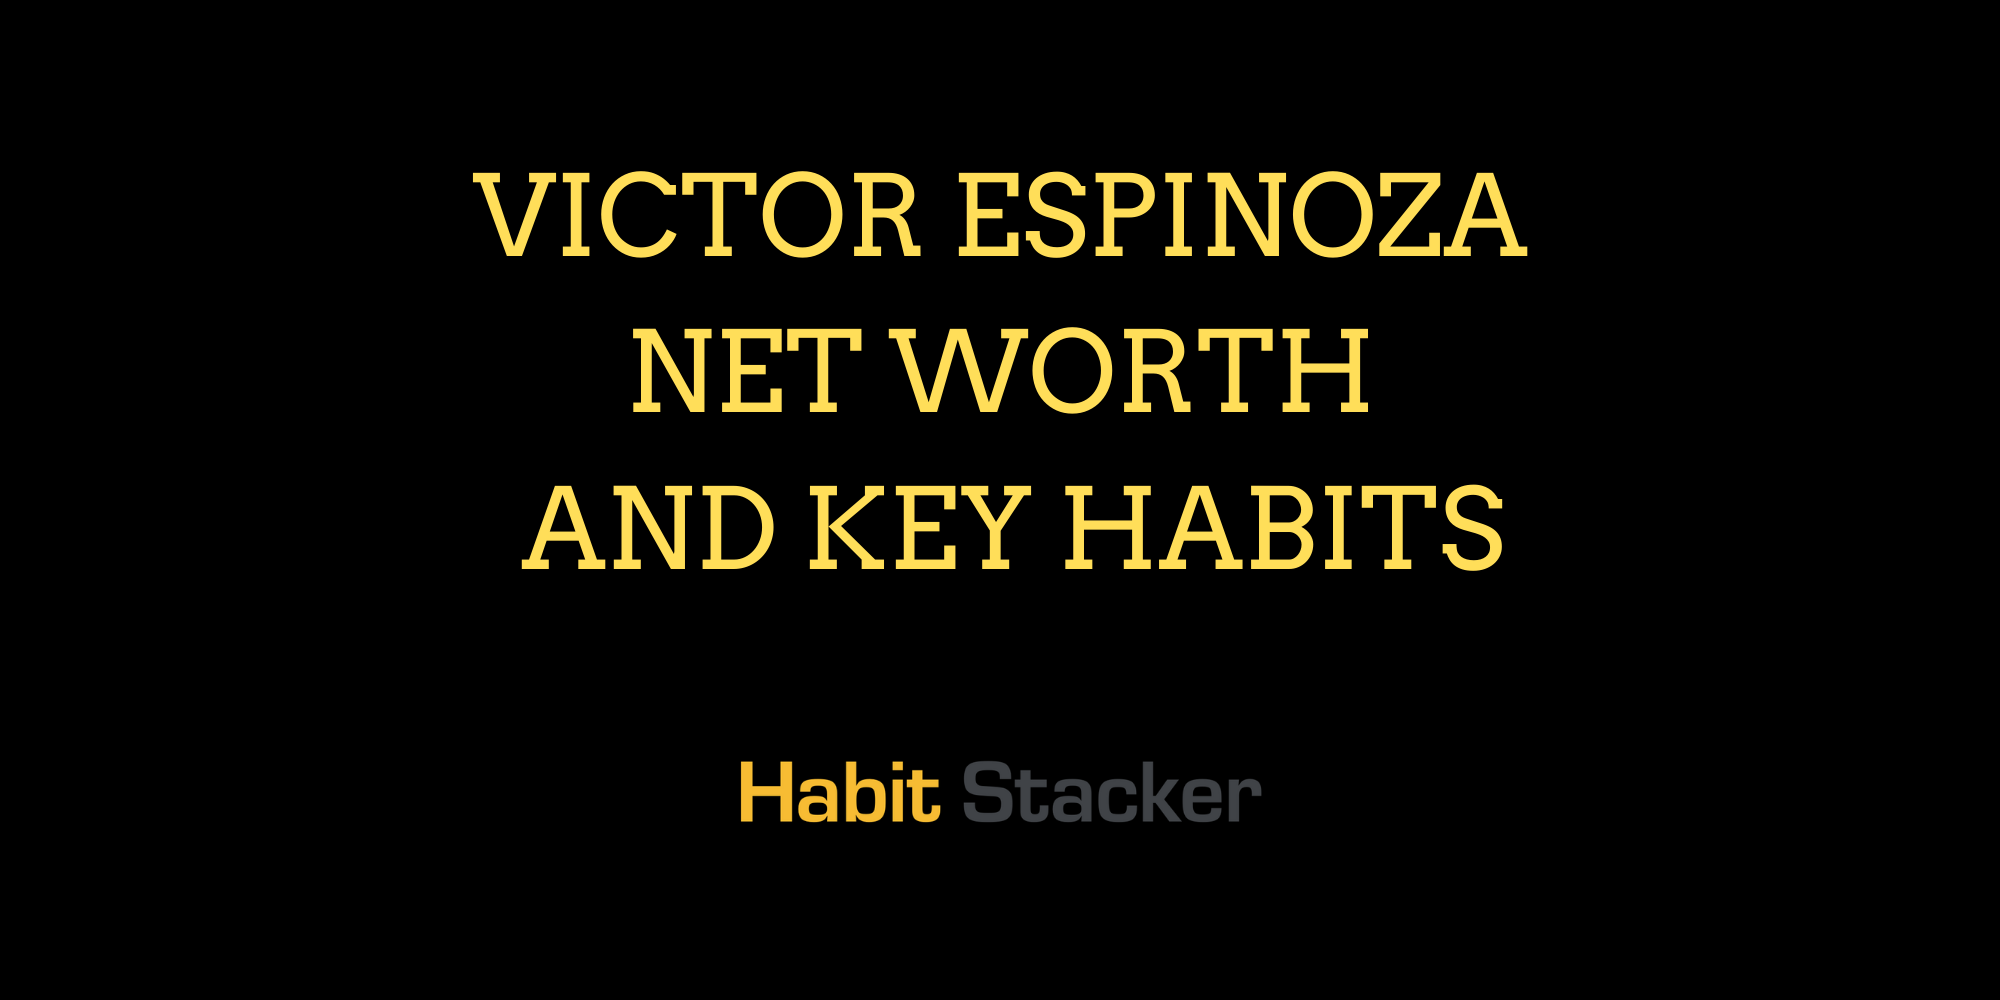 Victor Espinoza Net Worth and Key Habits